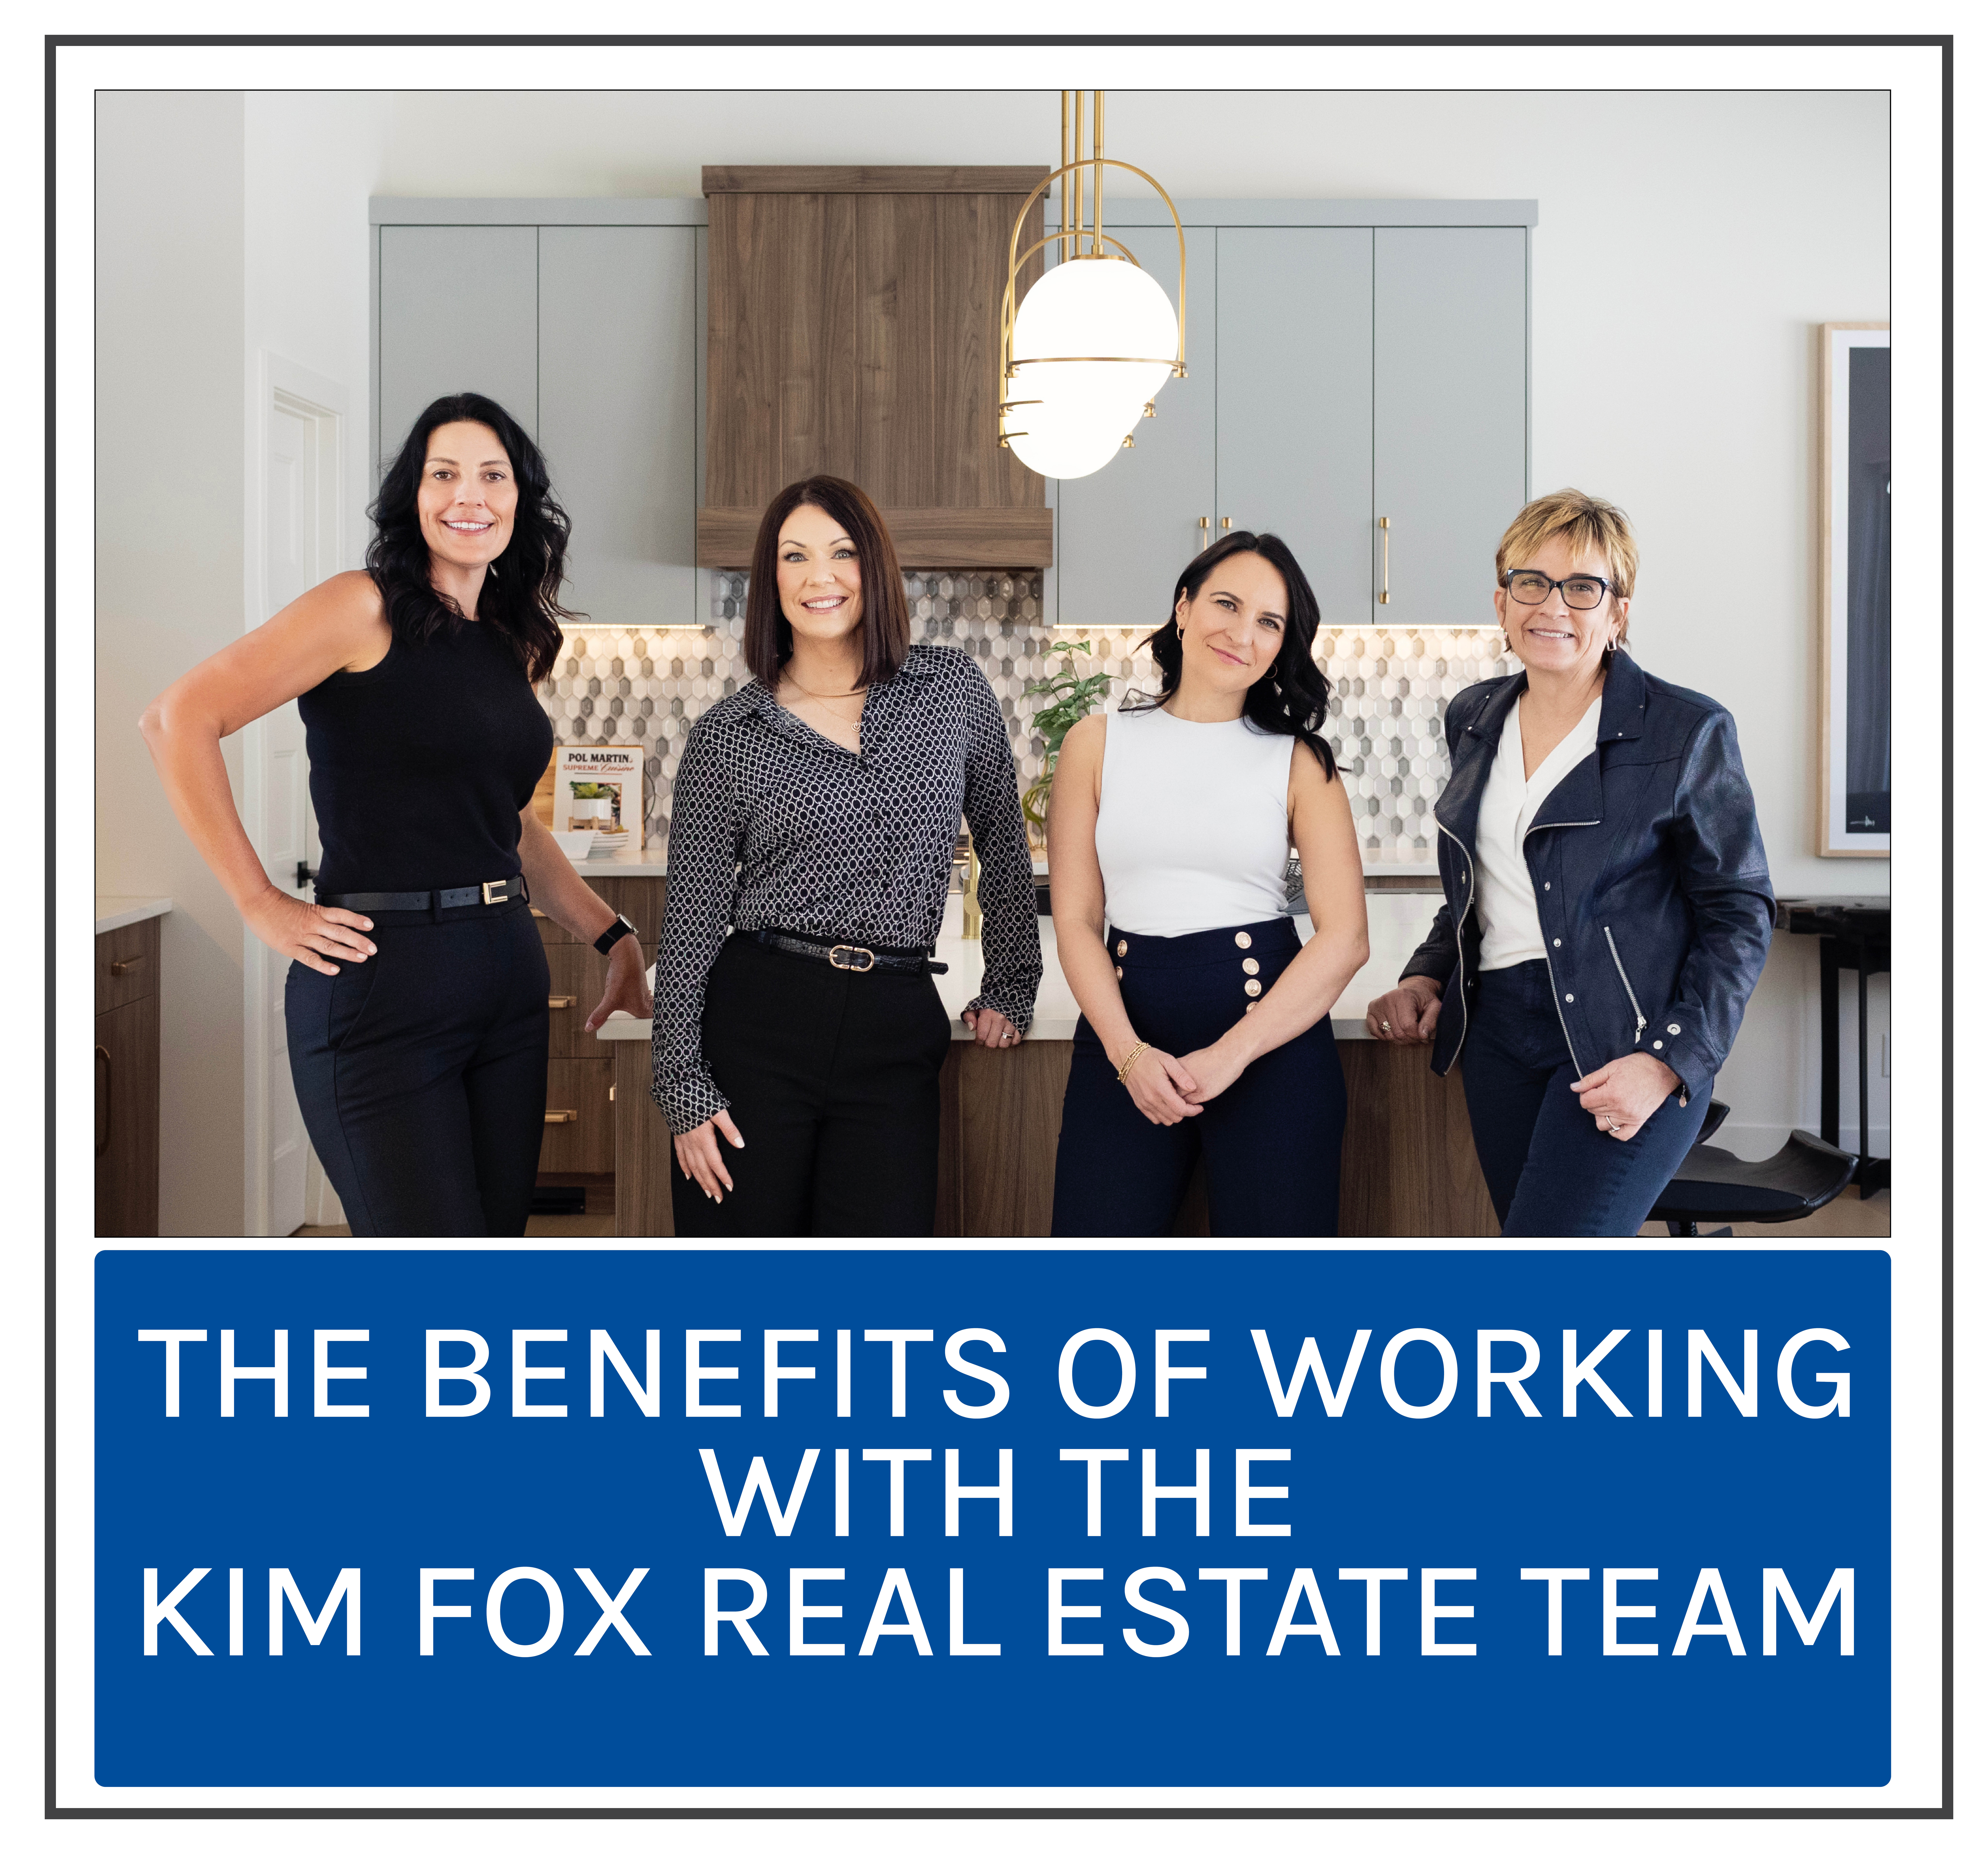 Kim Fox Real Estate Team